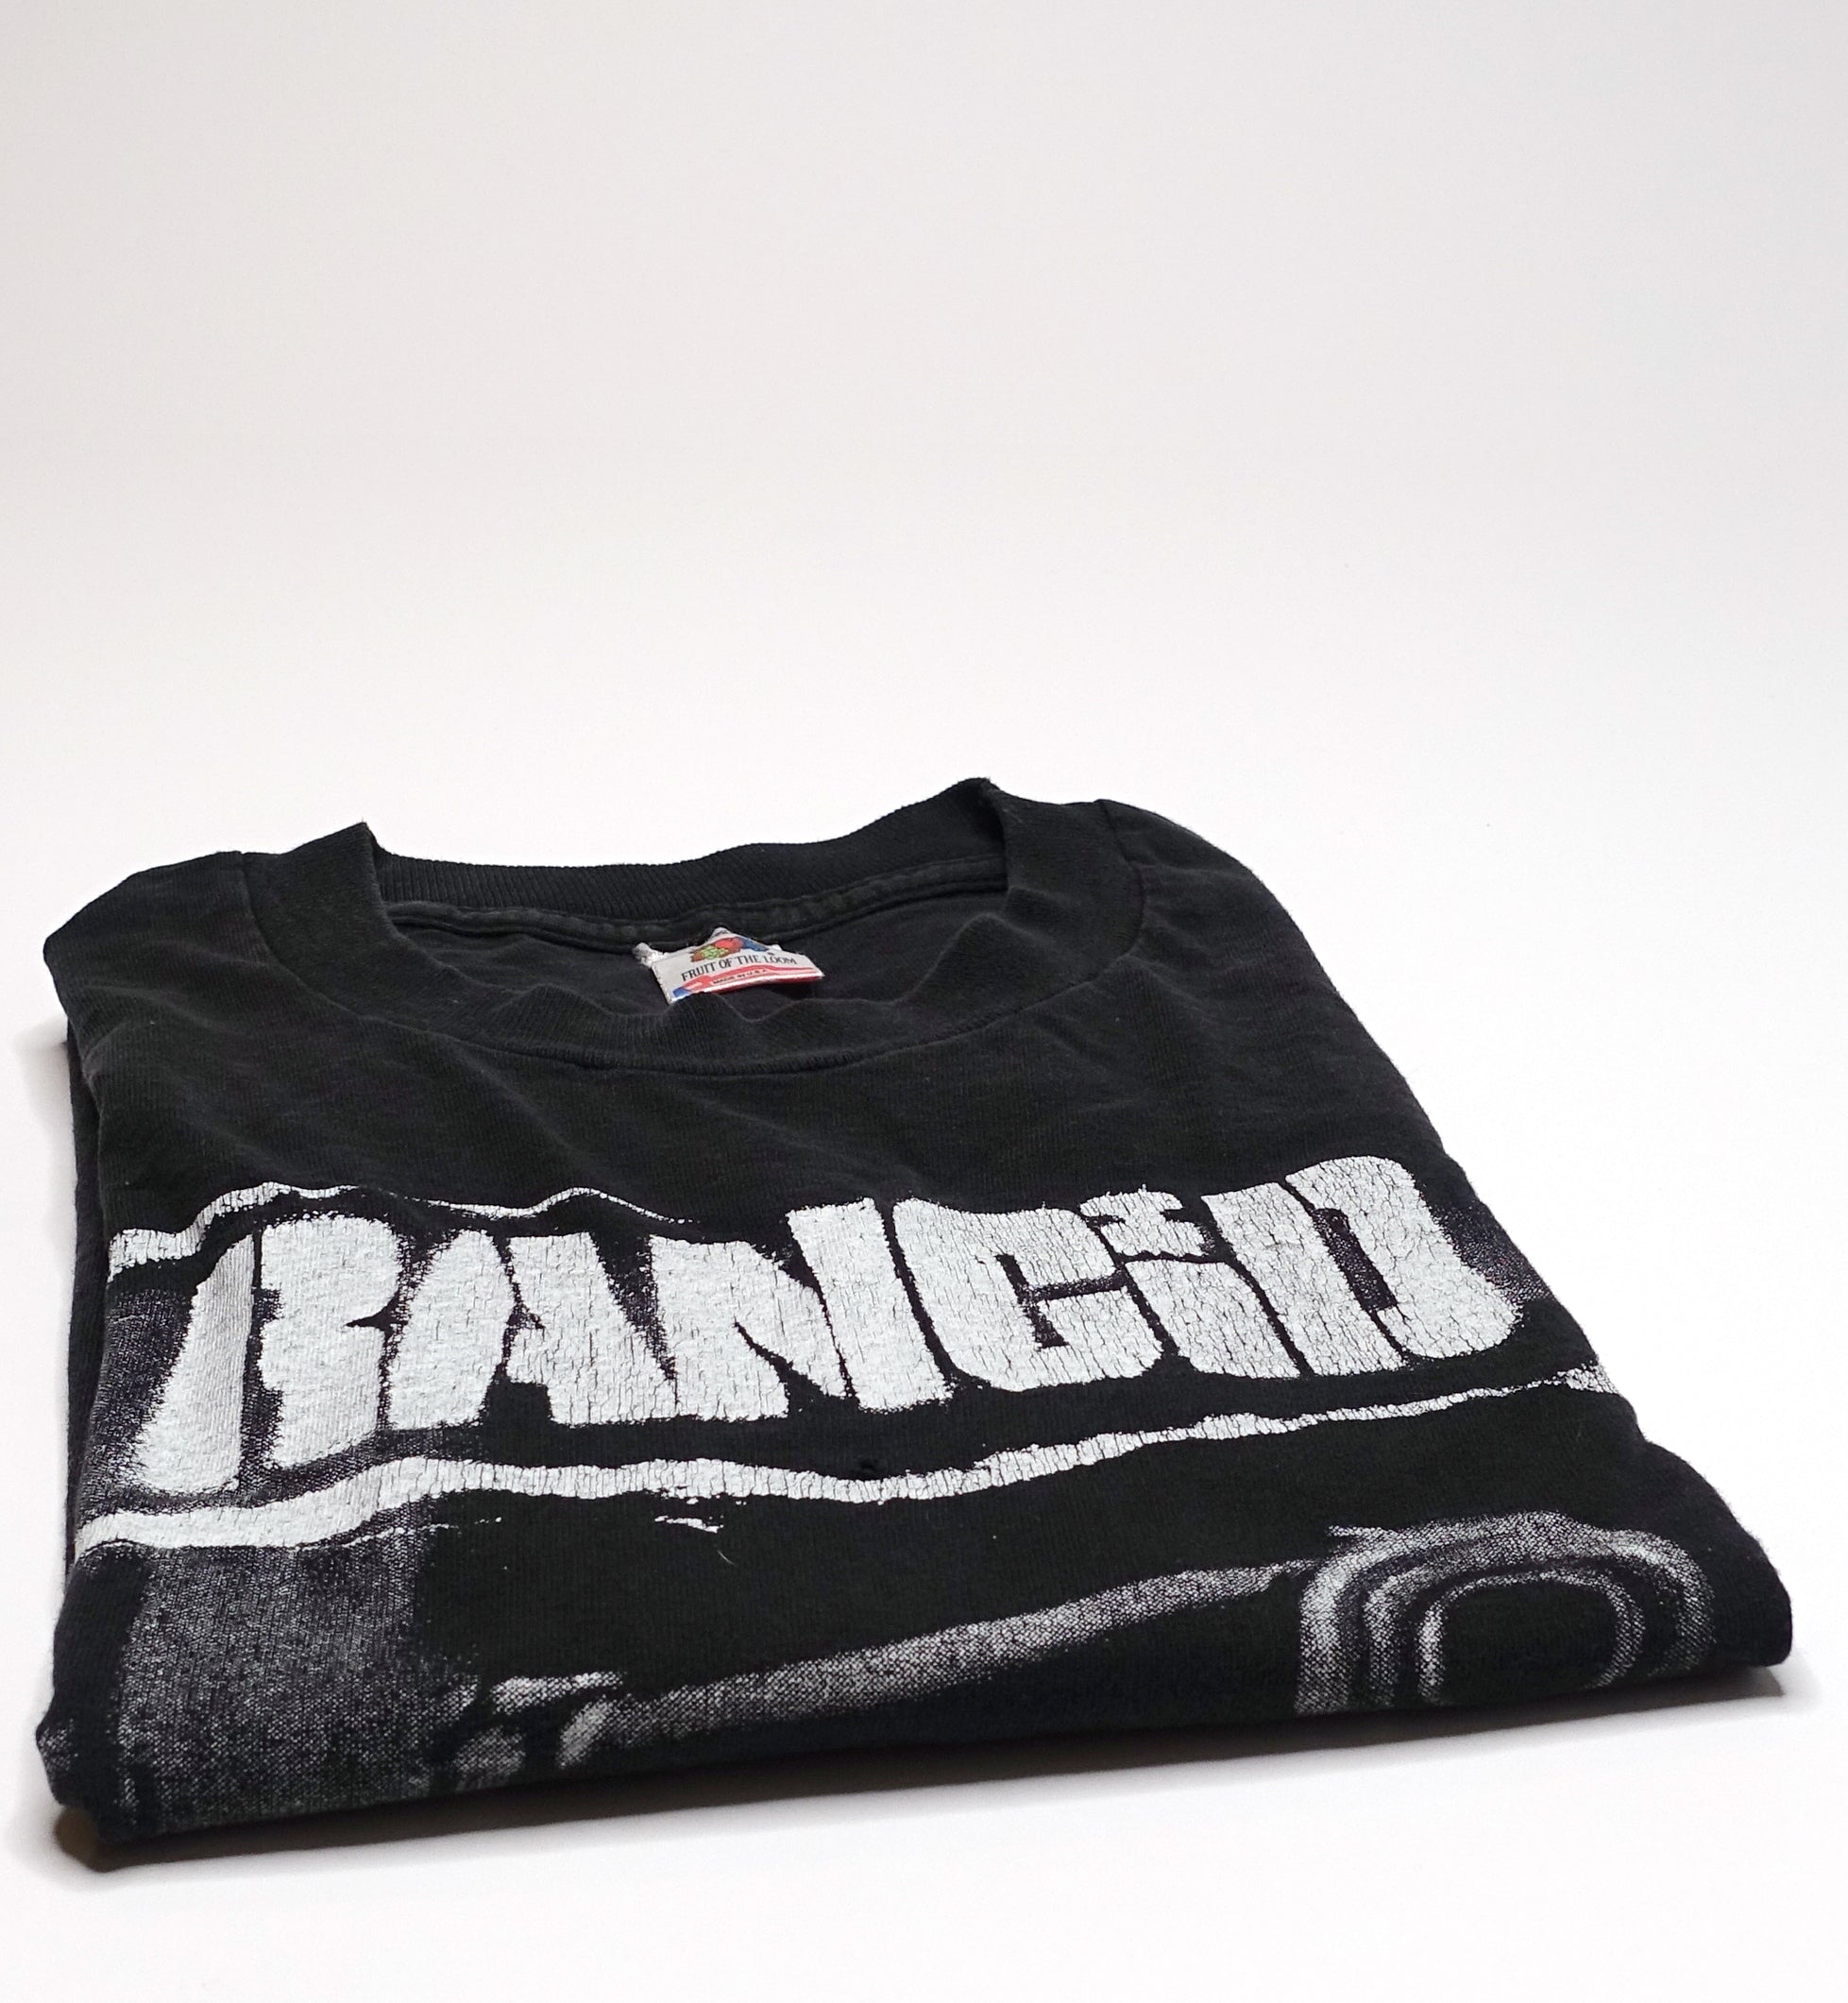 Rancid - Rancid S/T 1993 Tour Shirt Size XL